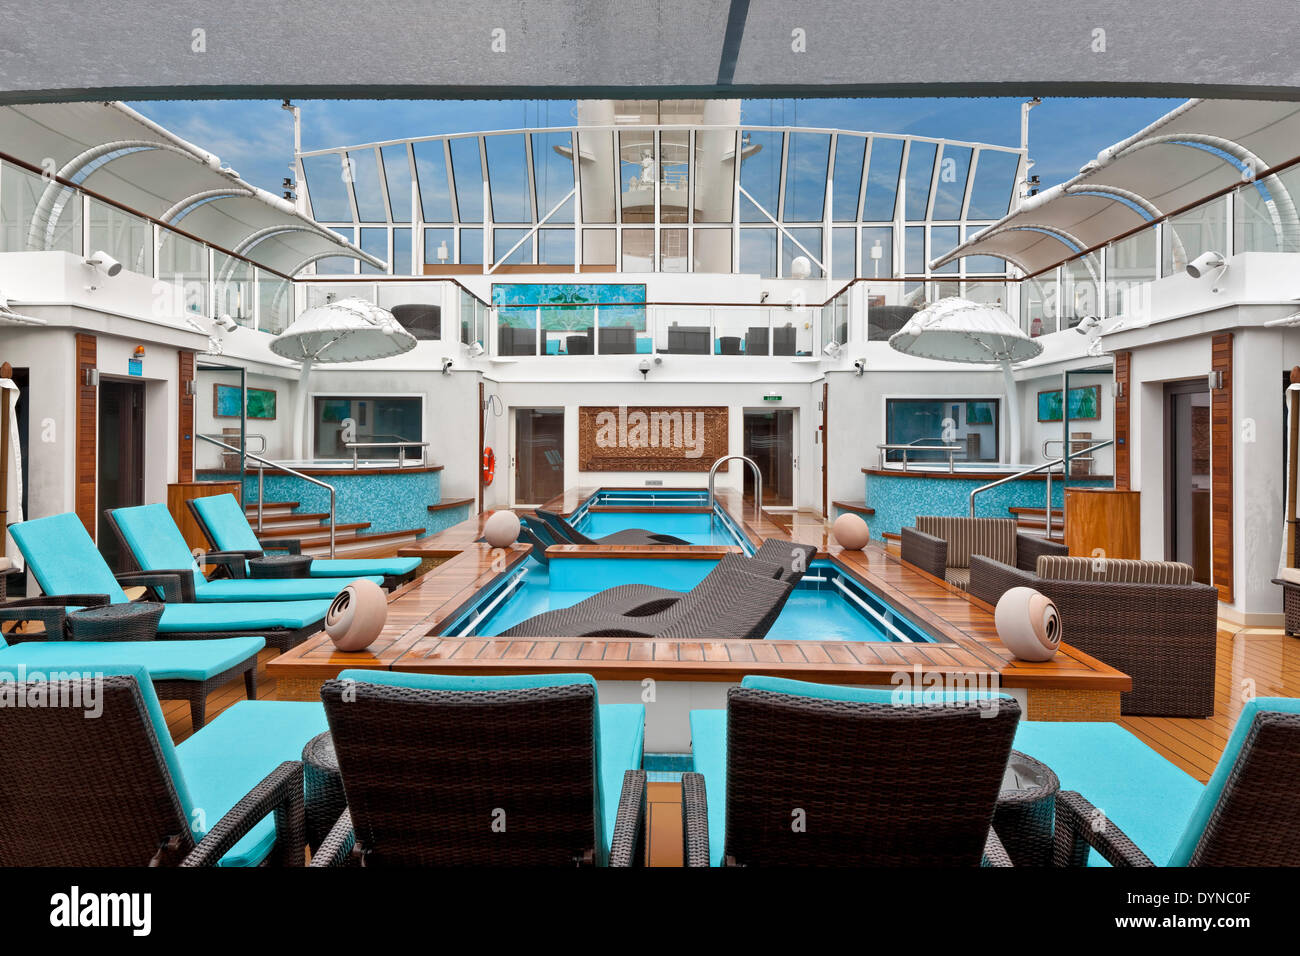 Norwegian Getaway Cruise Ship, Southampton, United Kingdom. Architect: SMC Design, 2014. Stock Photo